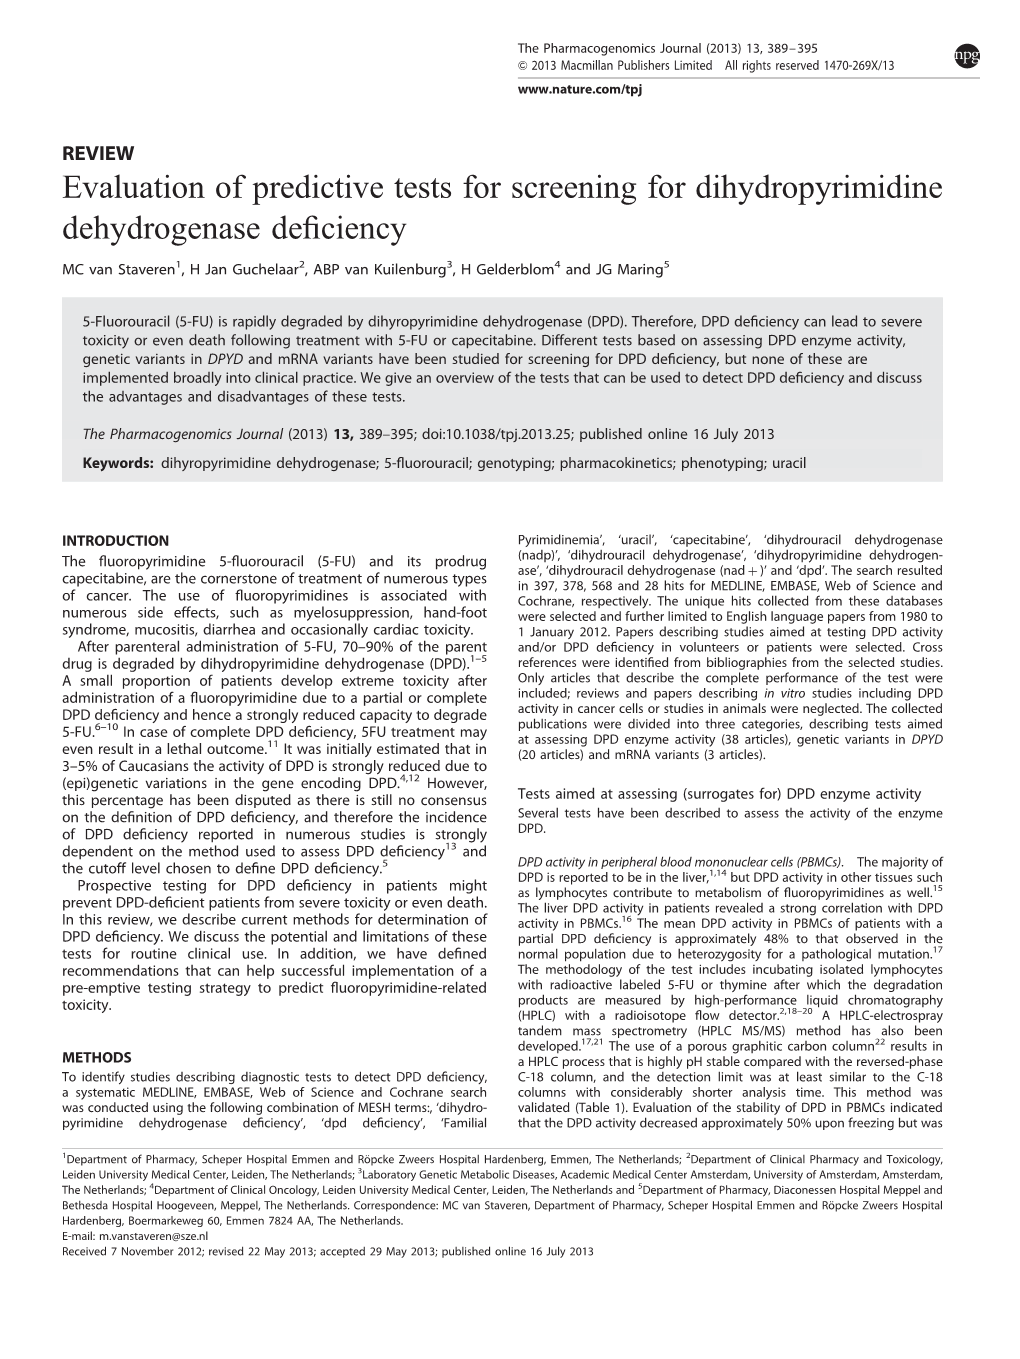 Evaluation of Predictive Tests for Screening for Dihydropyrimidine Dehydrogenase Deﬁciency